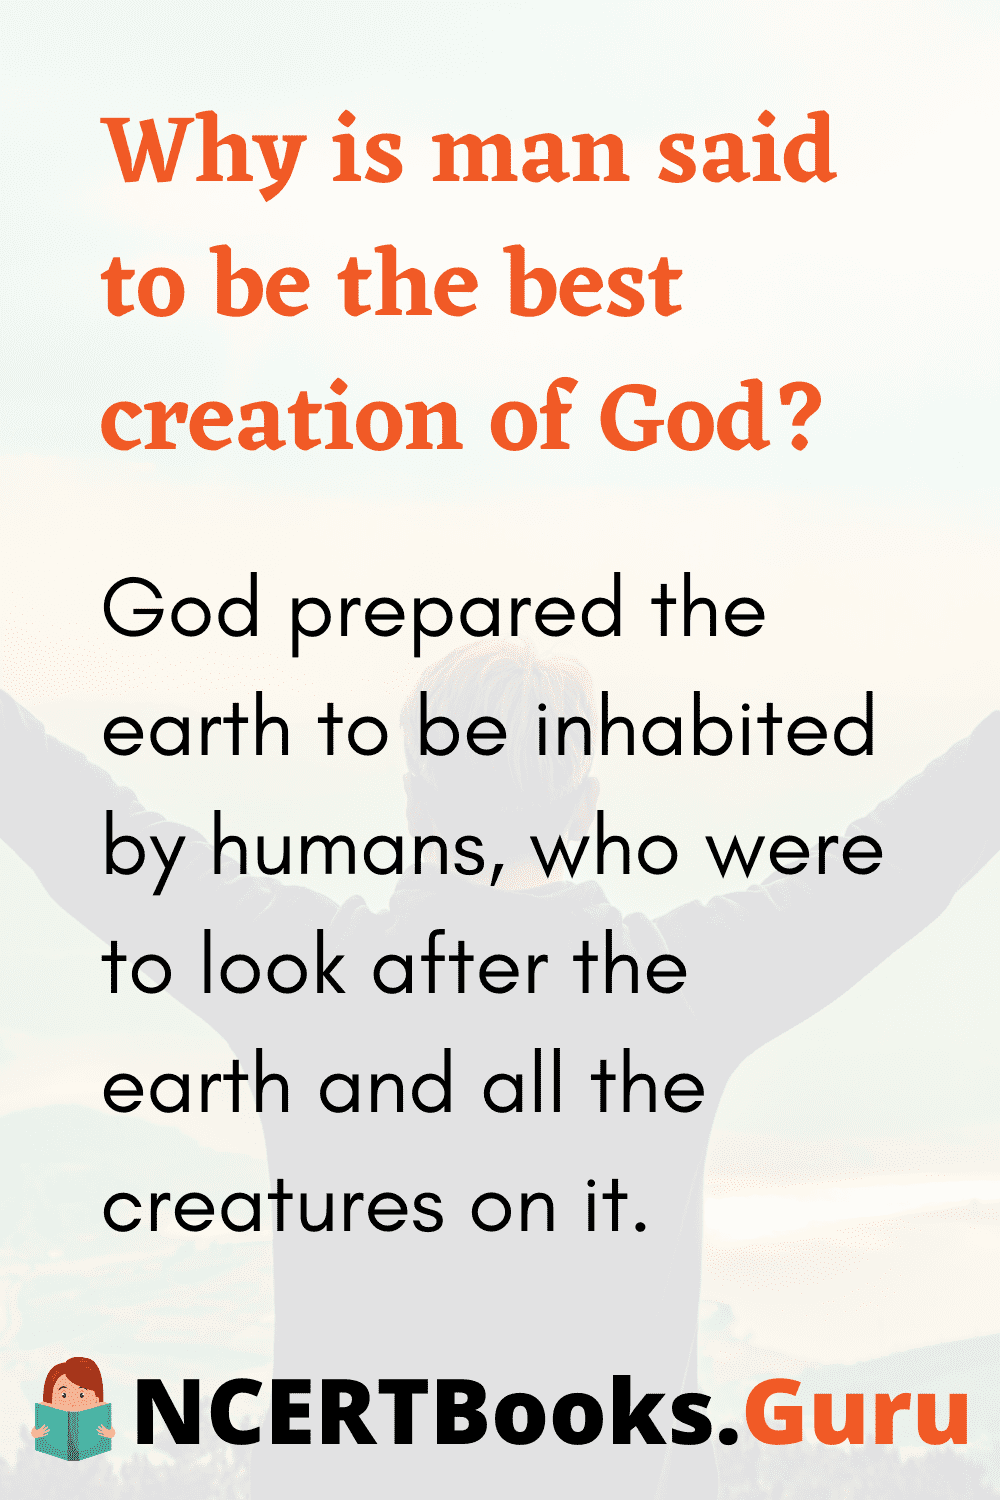 essay on god the creator